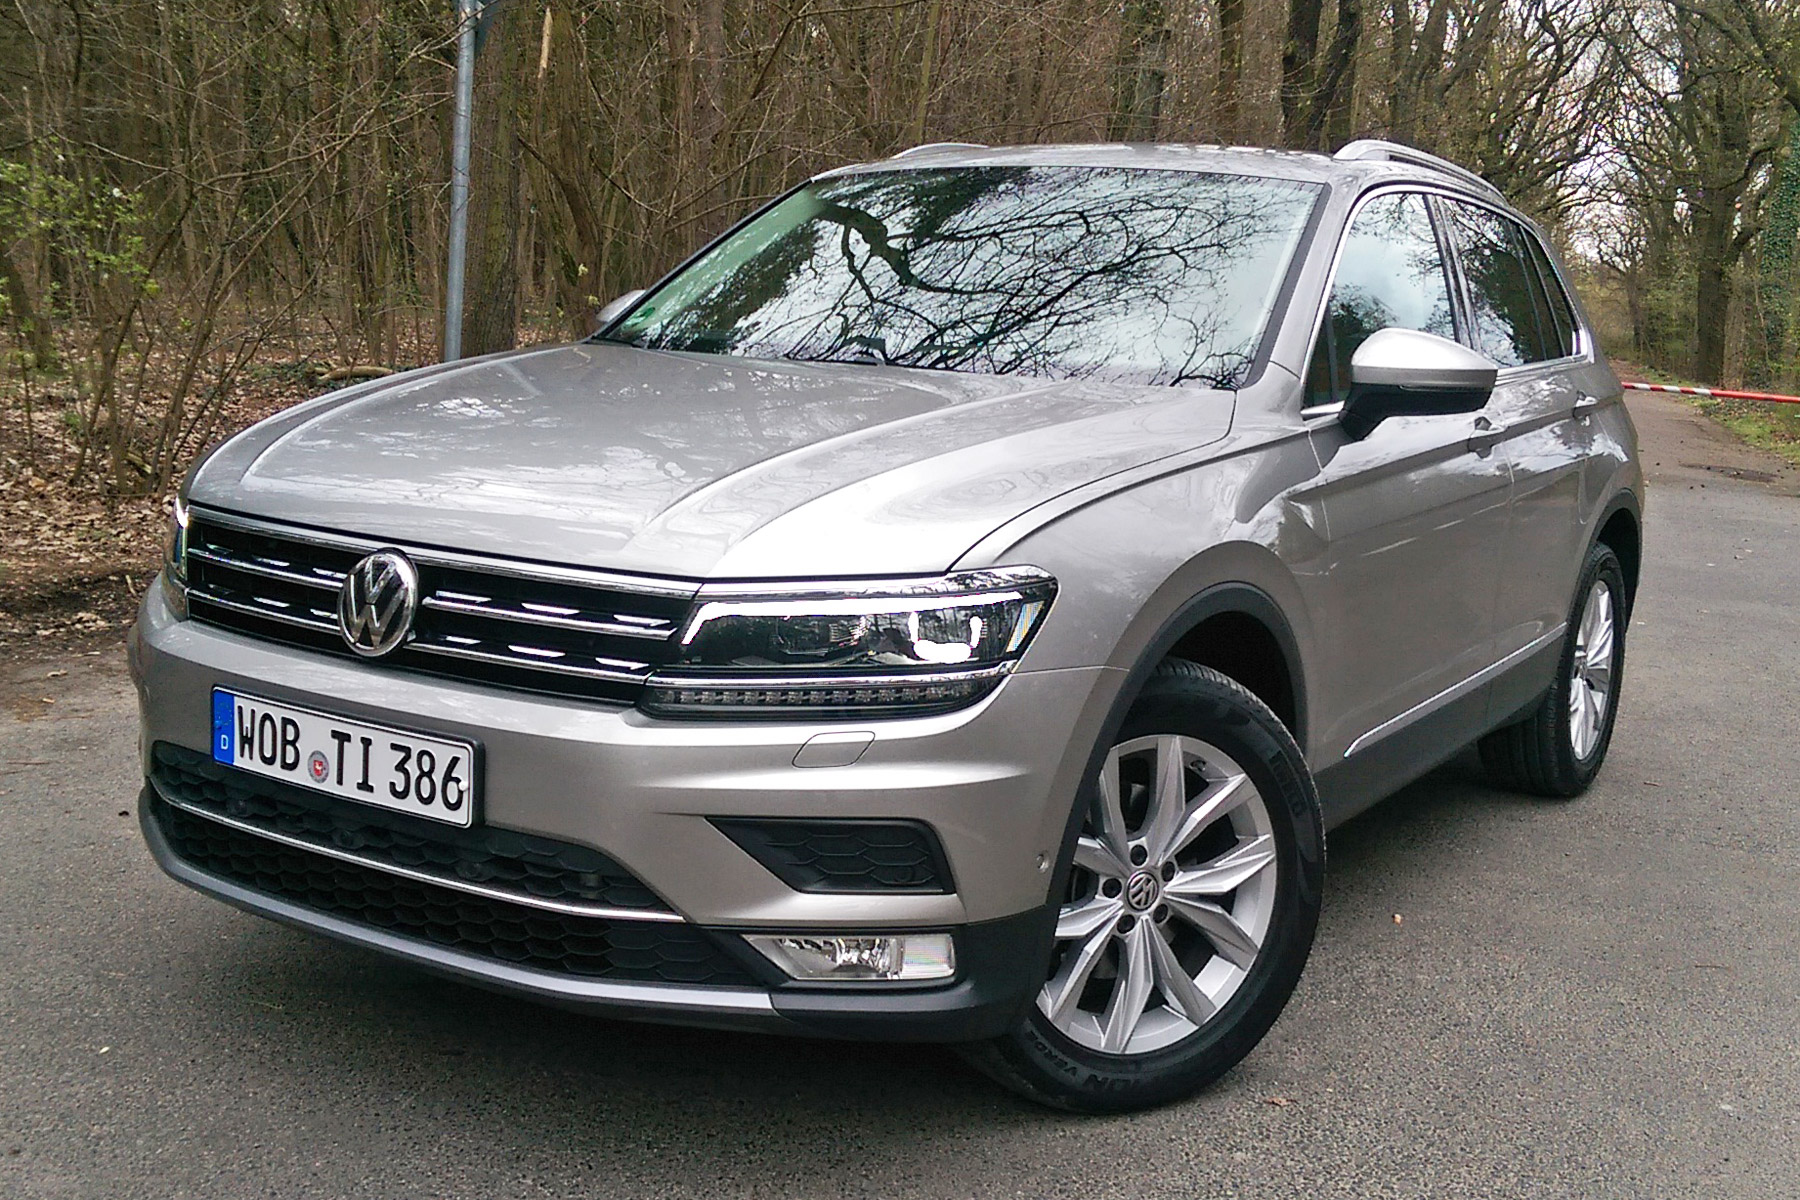 Unlocked: 2016 Volkswagen Tiguan driven on road (and off it)